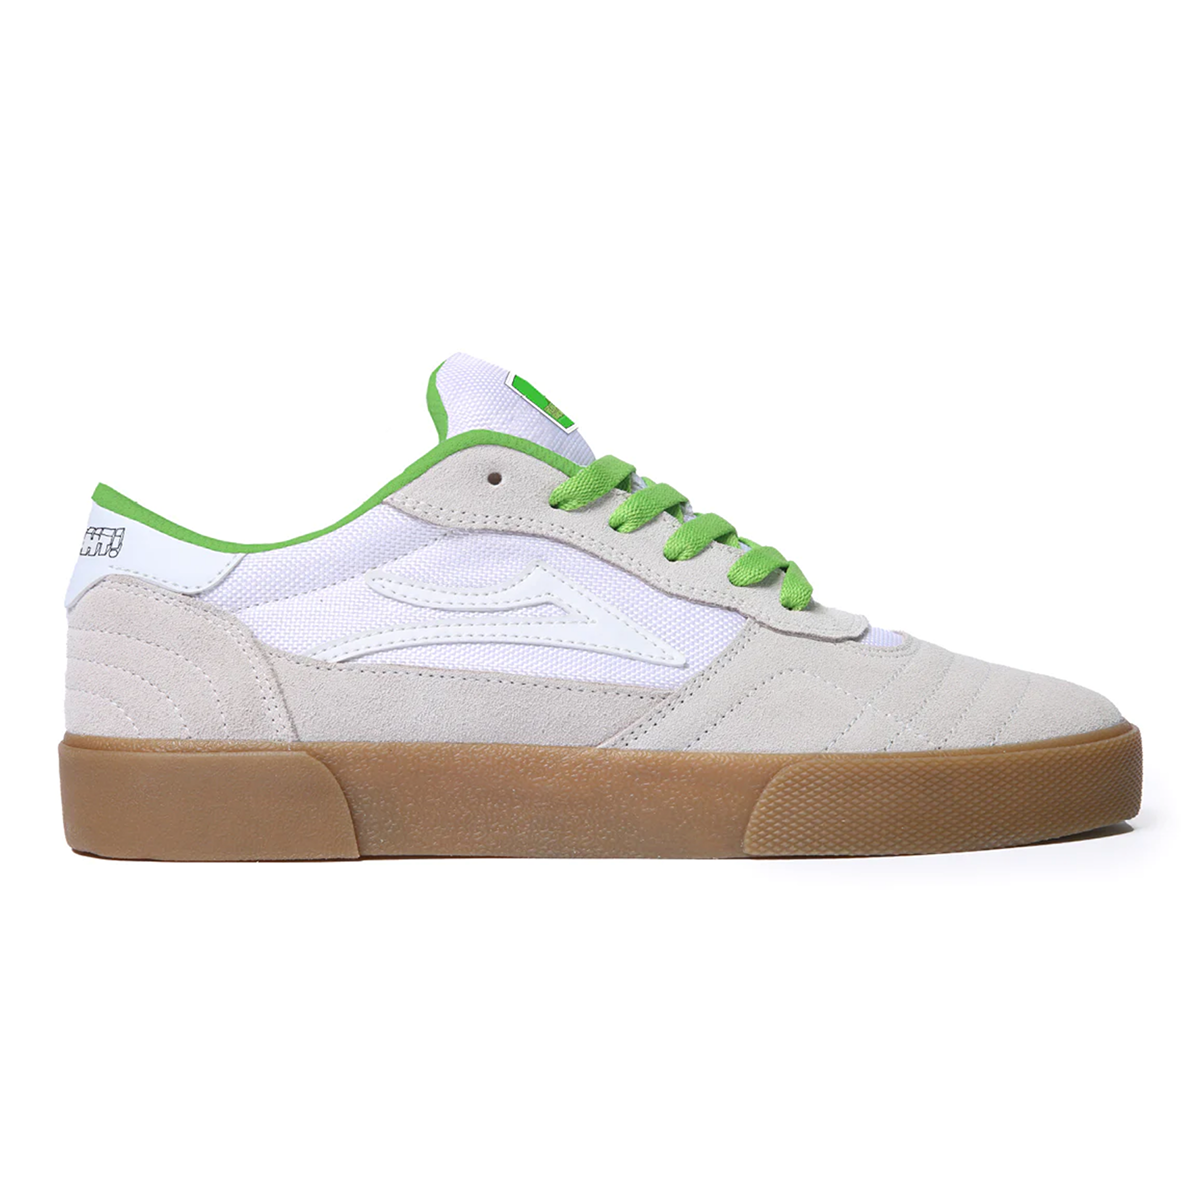 Lakai x Yeah Right! Cambridge Shoes - White/UV Green